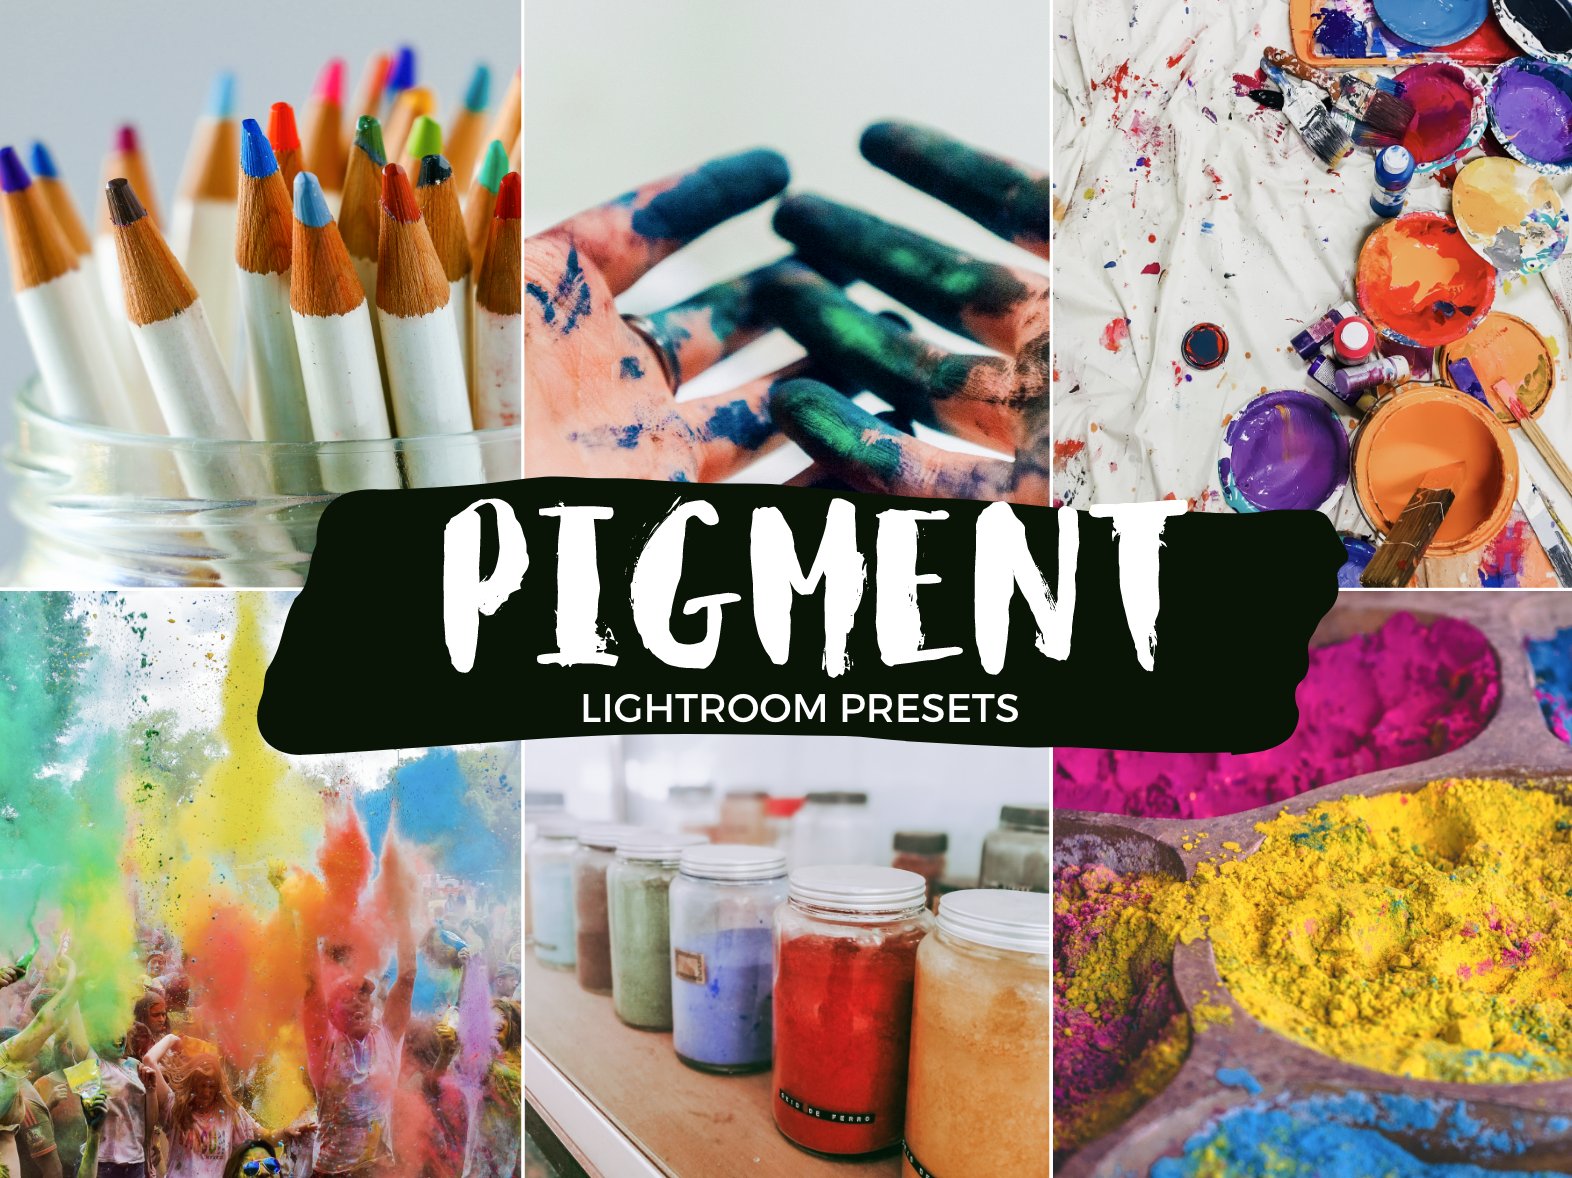 10 Lightroom Presets - Pigmentcover image.